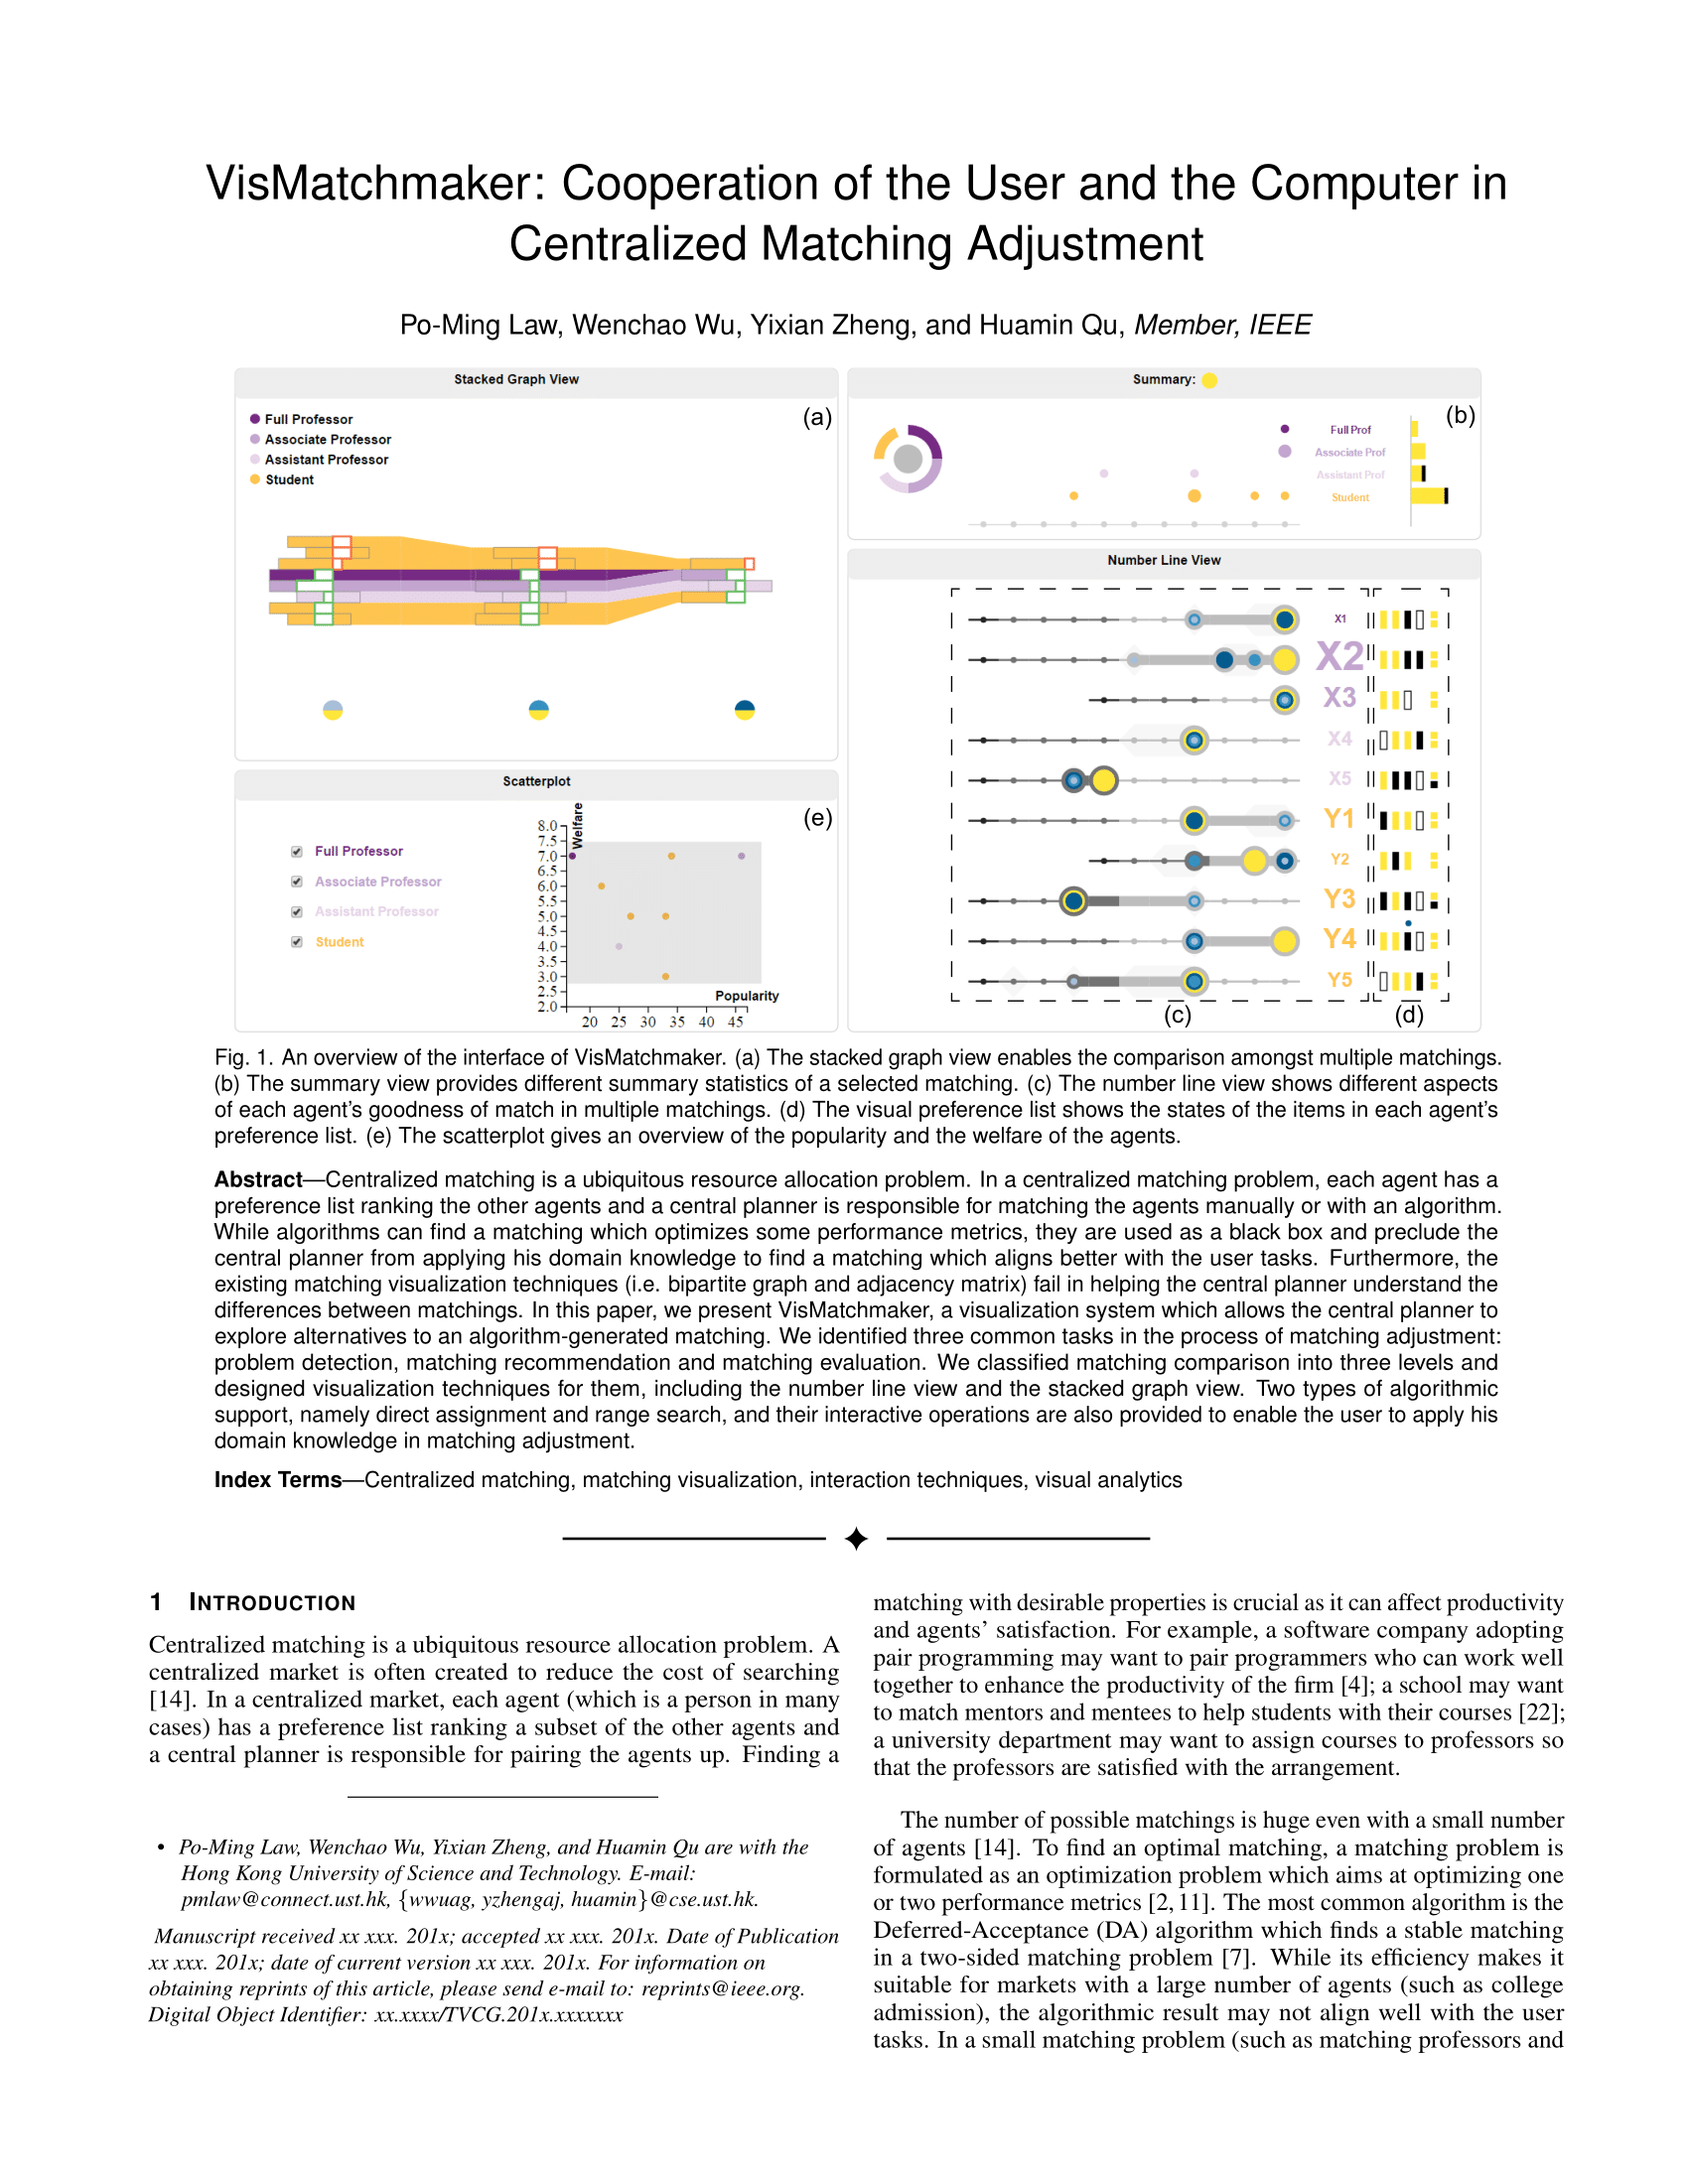 IEEE VIS 2016 paper